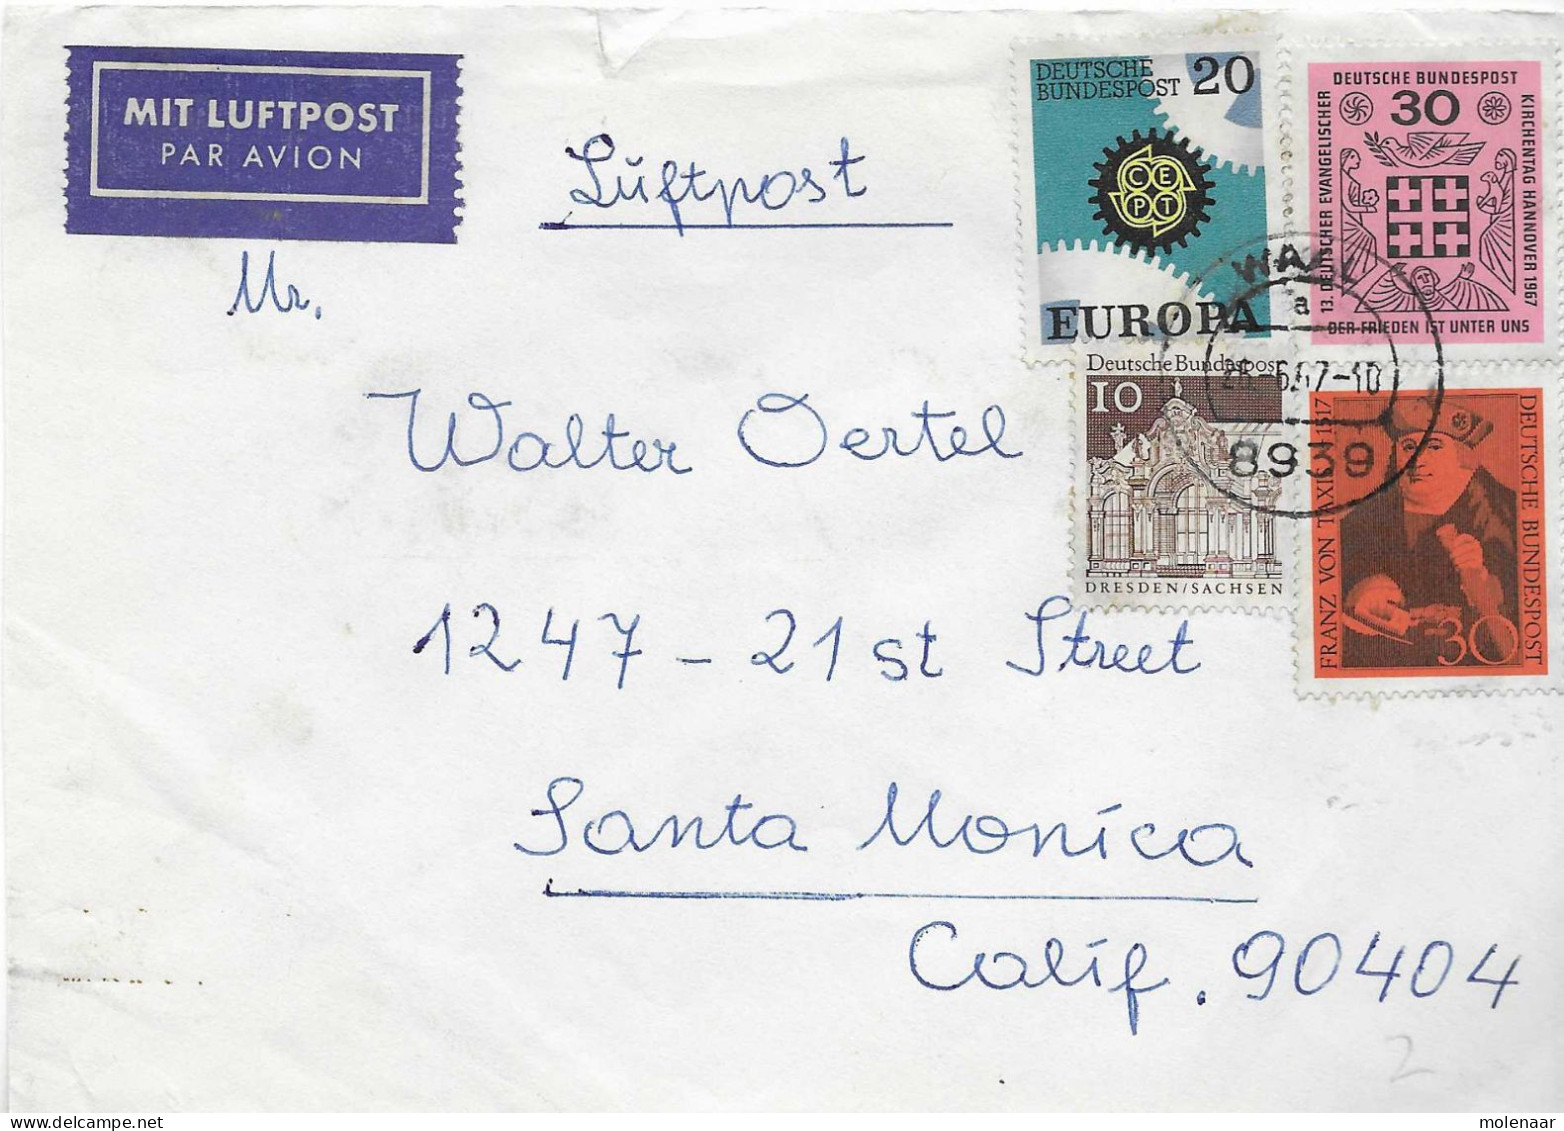 Postzegels > Europa > Duitsland > West-Duitsland > 1960-1969 > Brief Met 4 Postzegels (17345) - Covers & Documents